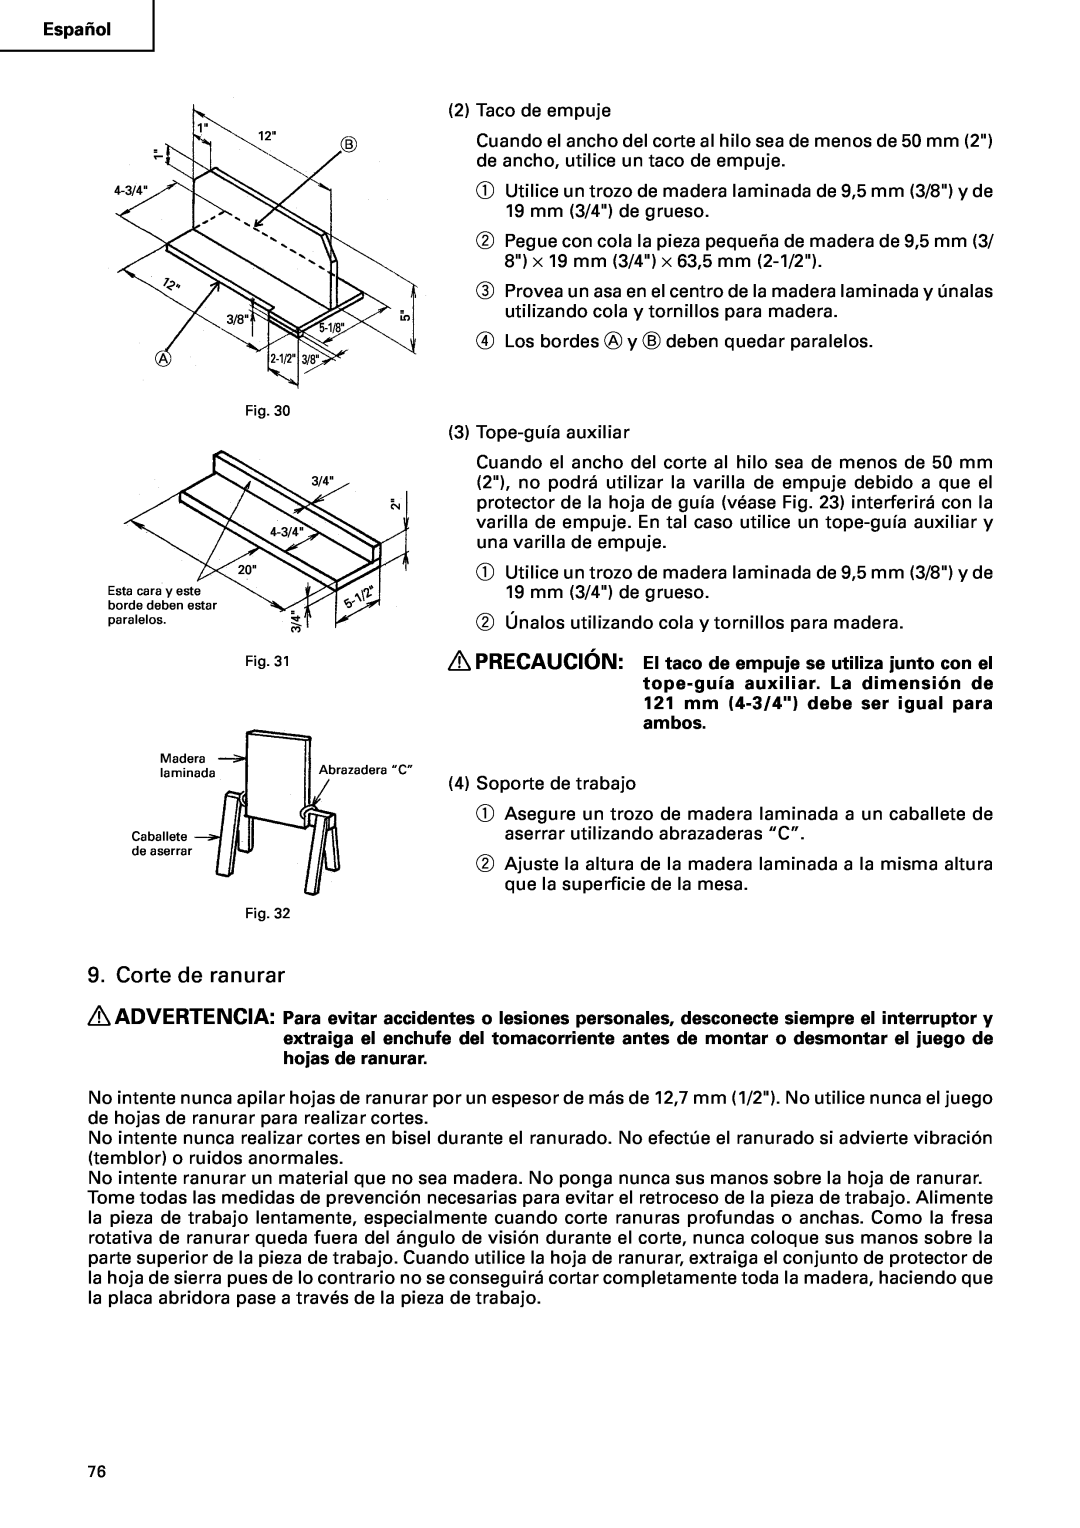 Hitachi C10RA2 instruction manual Corte de ranurar, Español, 121 mm 4-3/4 debe ser igual para ambos 